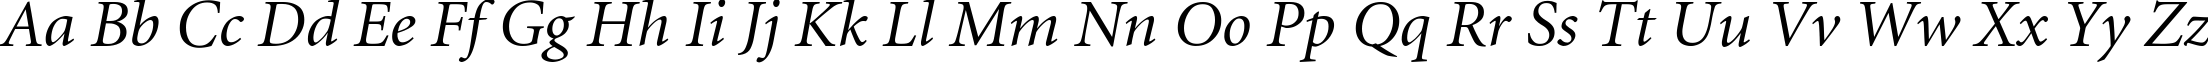 Пример написания английского алфавита шрифтом MinionCyr-Italic